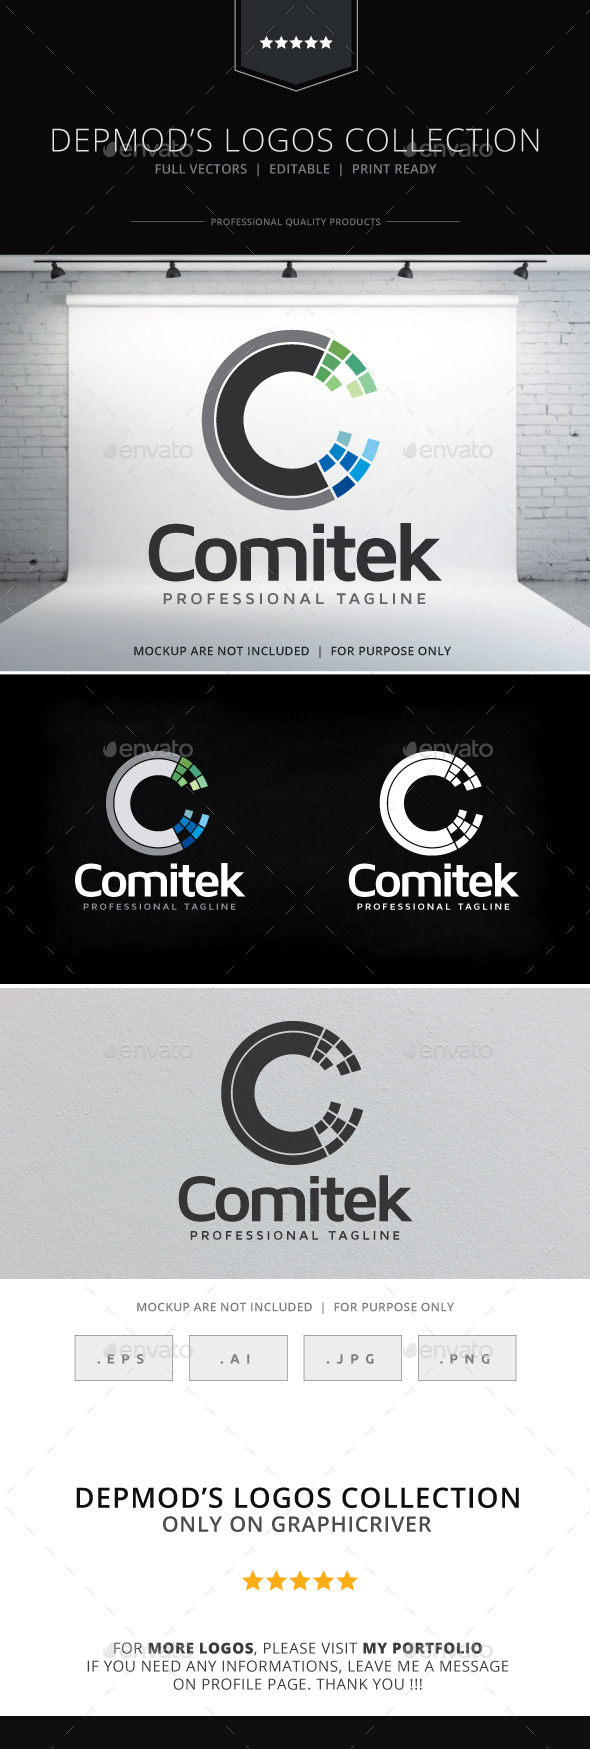 Comitek Logo